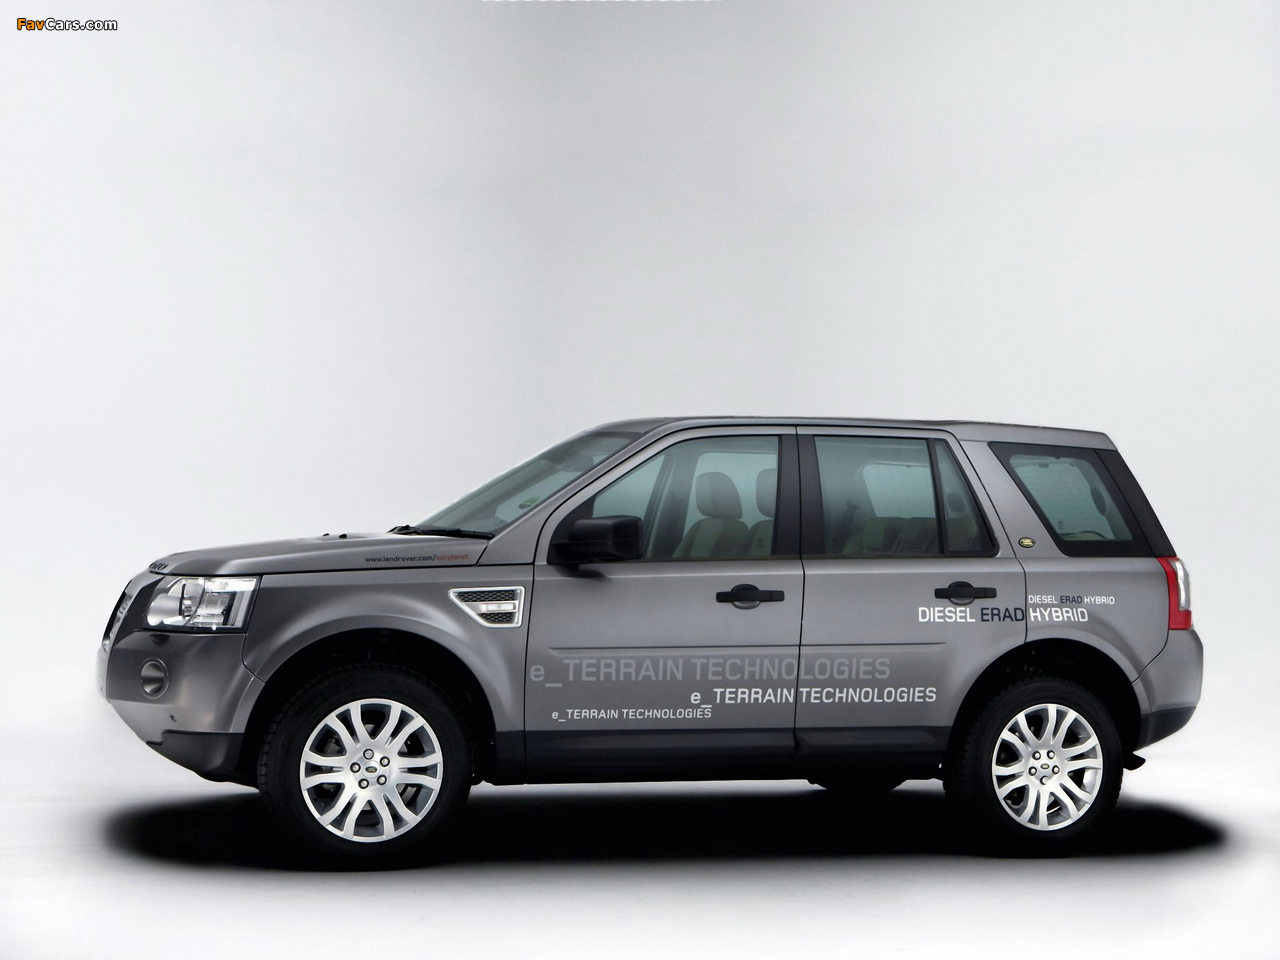 Pictures of Land Rover Diesel ERAD Hybrid Prototype 2008 (1280 x 960)